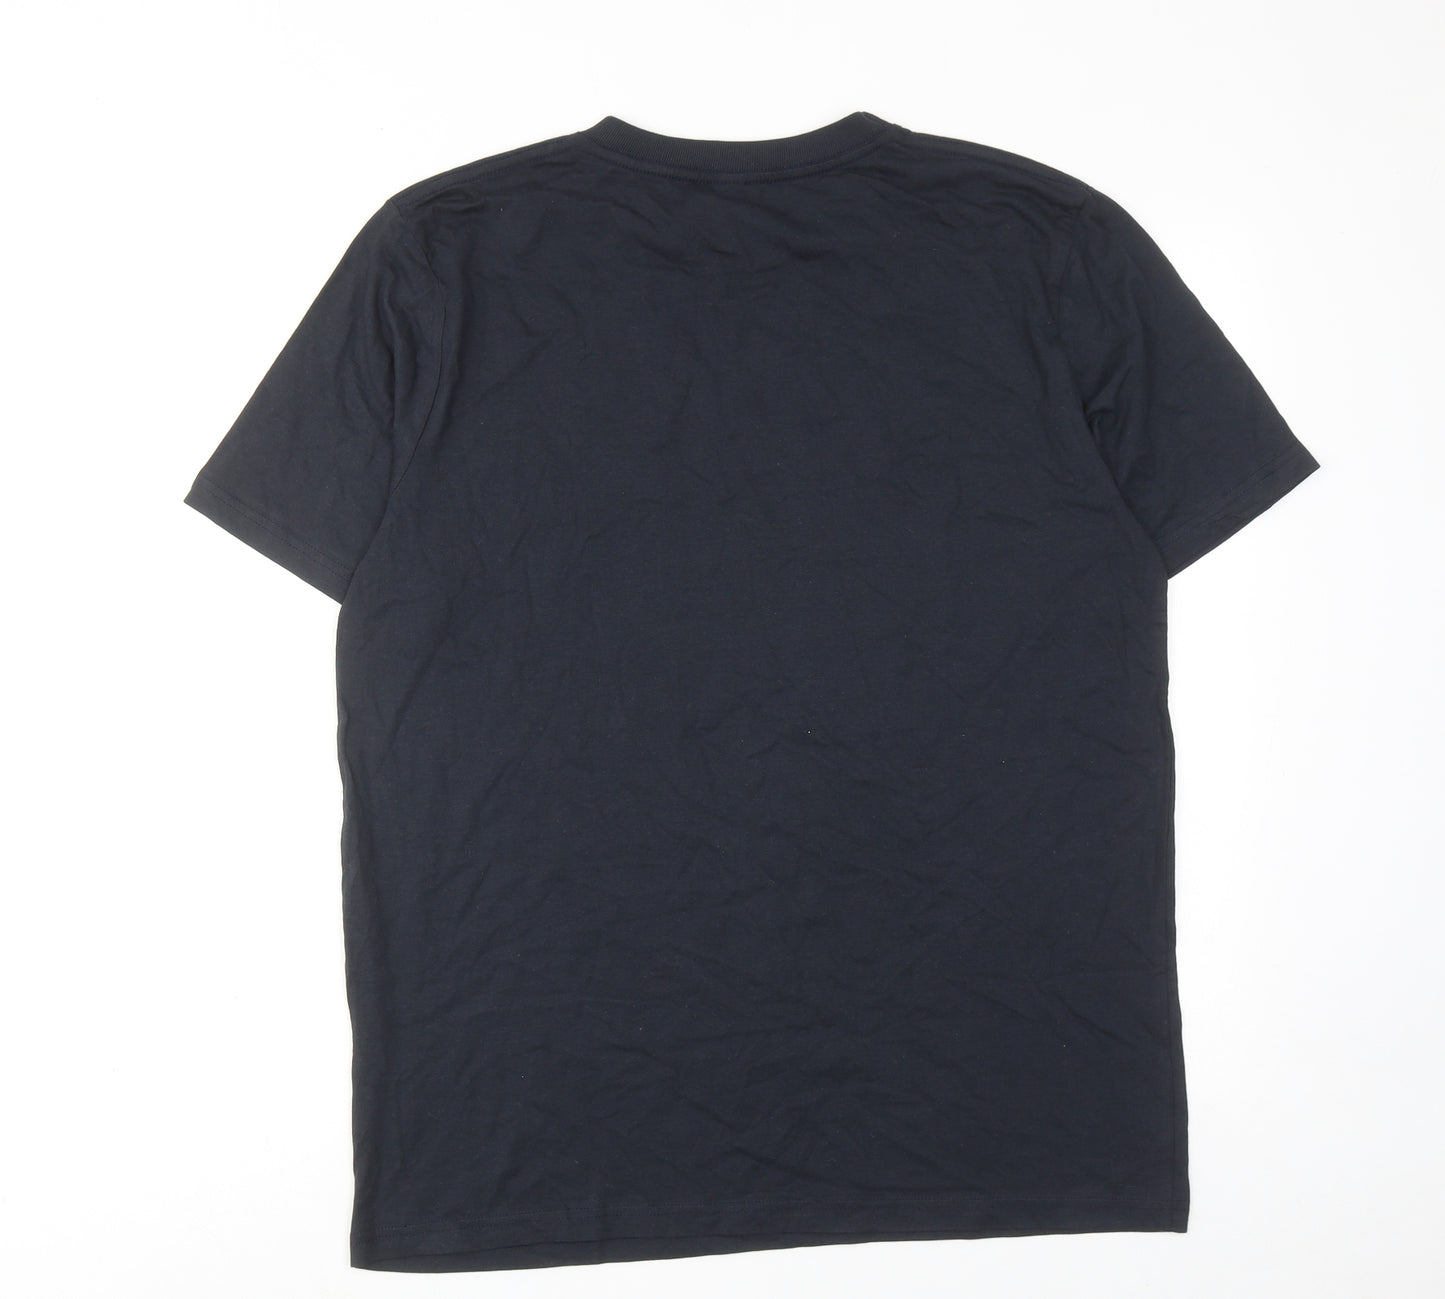 Teemil Mens Black Cotton T-Shirt Size L Round Neck